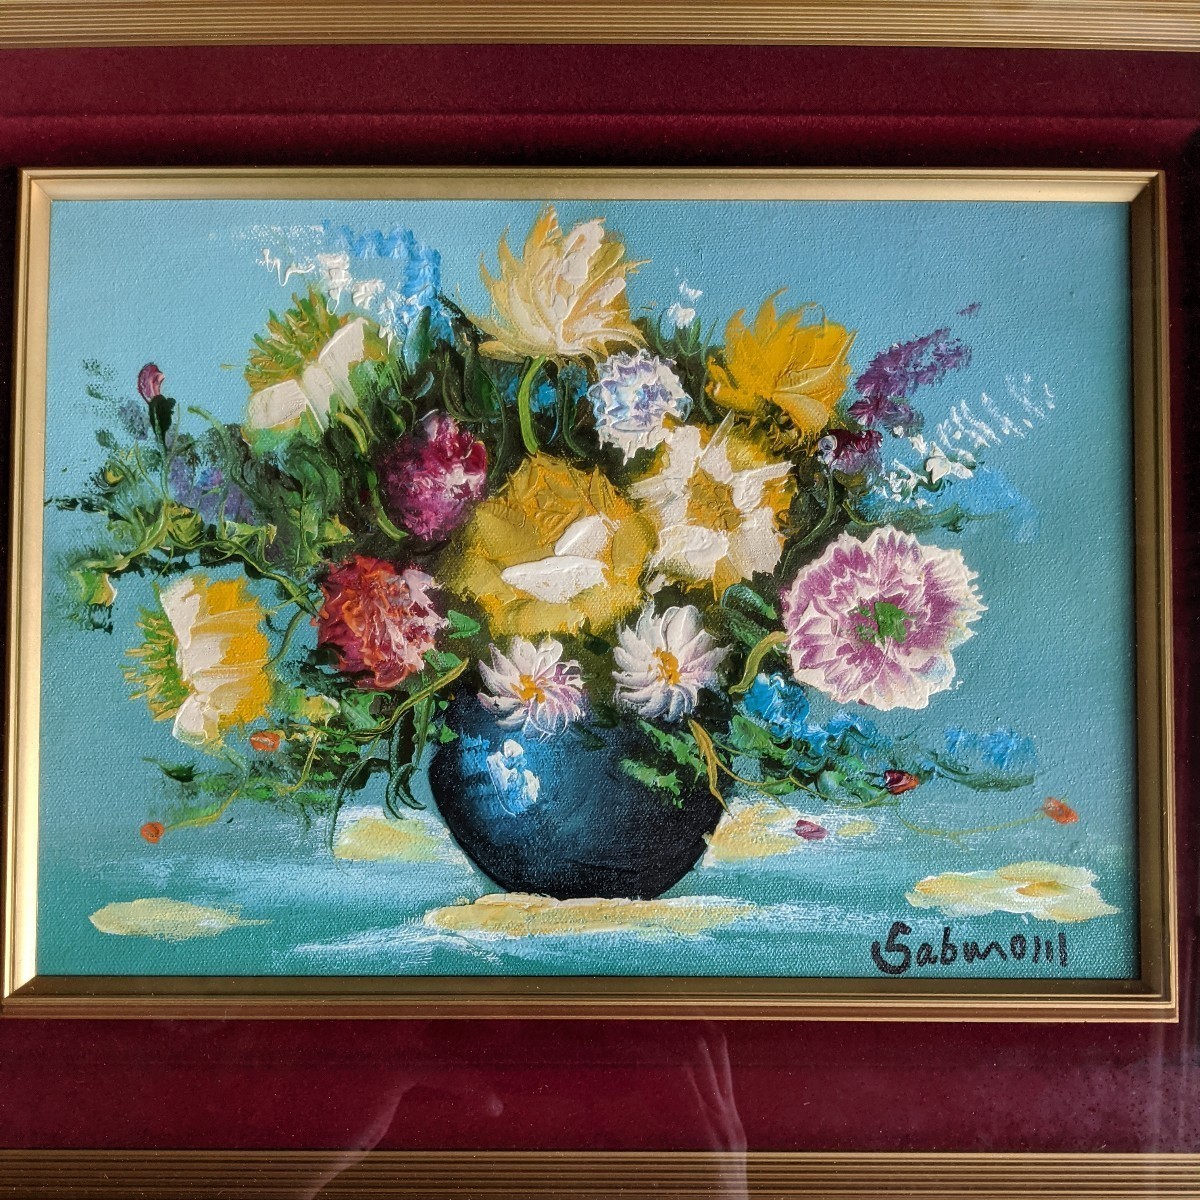 [Reproduktion] Miyamoto Saburo Blumen Ölgemälde, Malerei, Ölgemälde, Stillleben